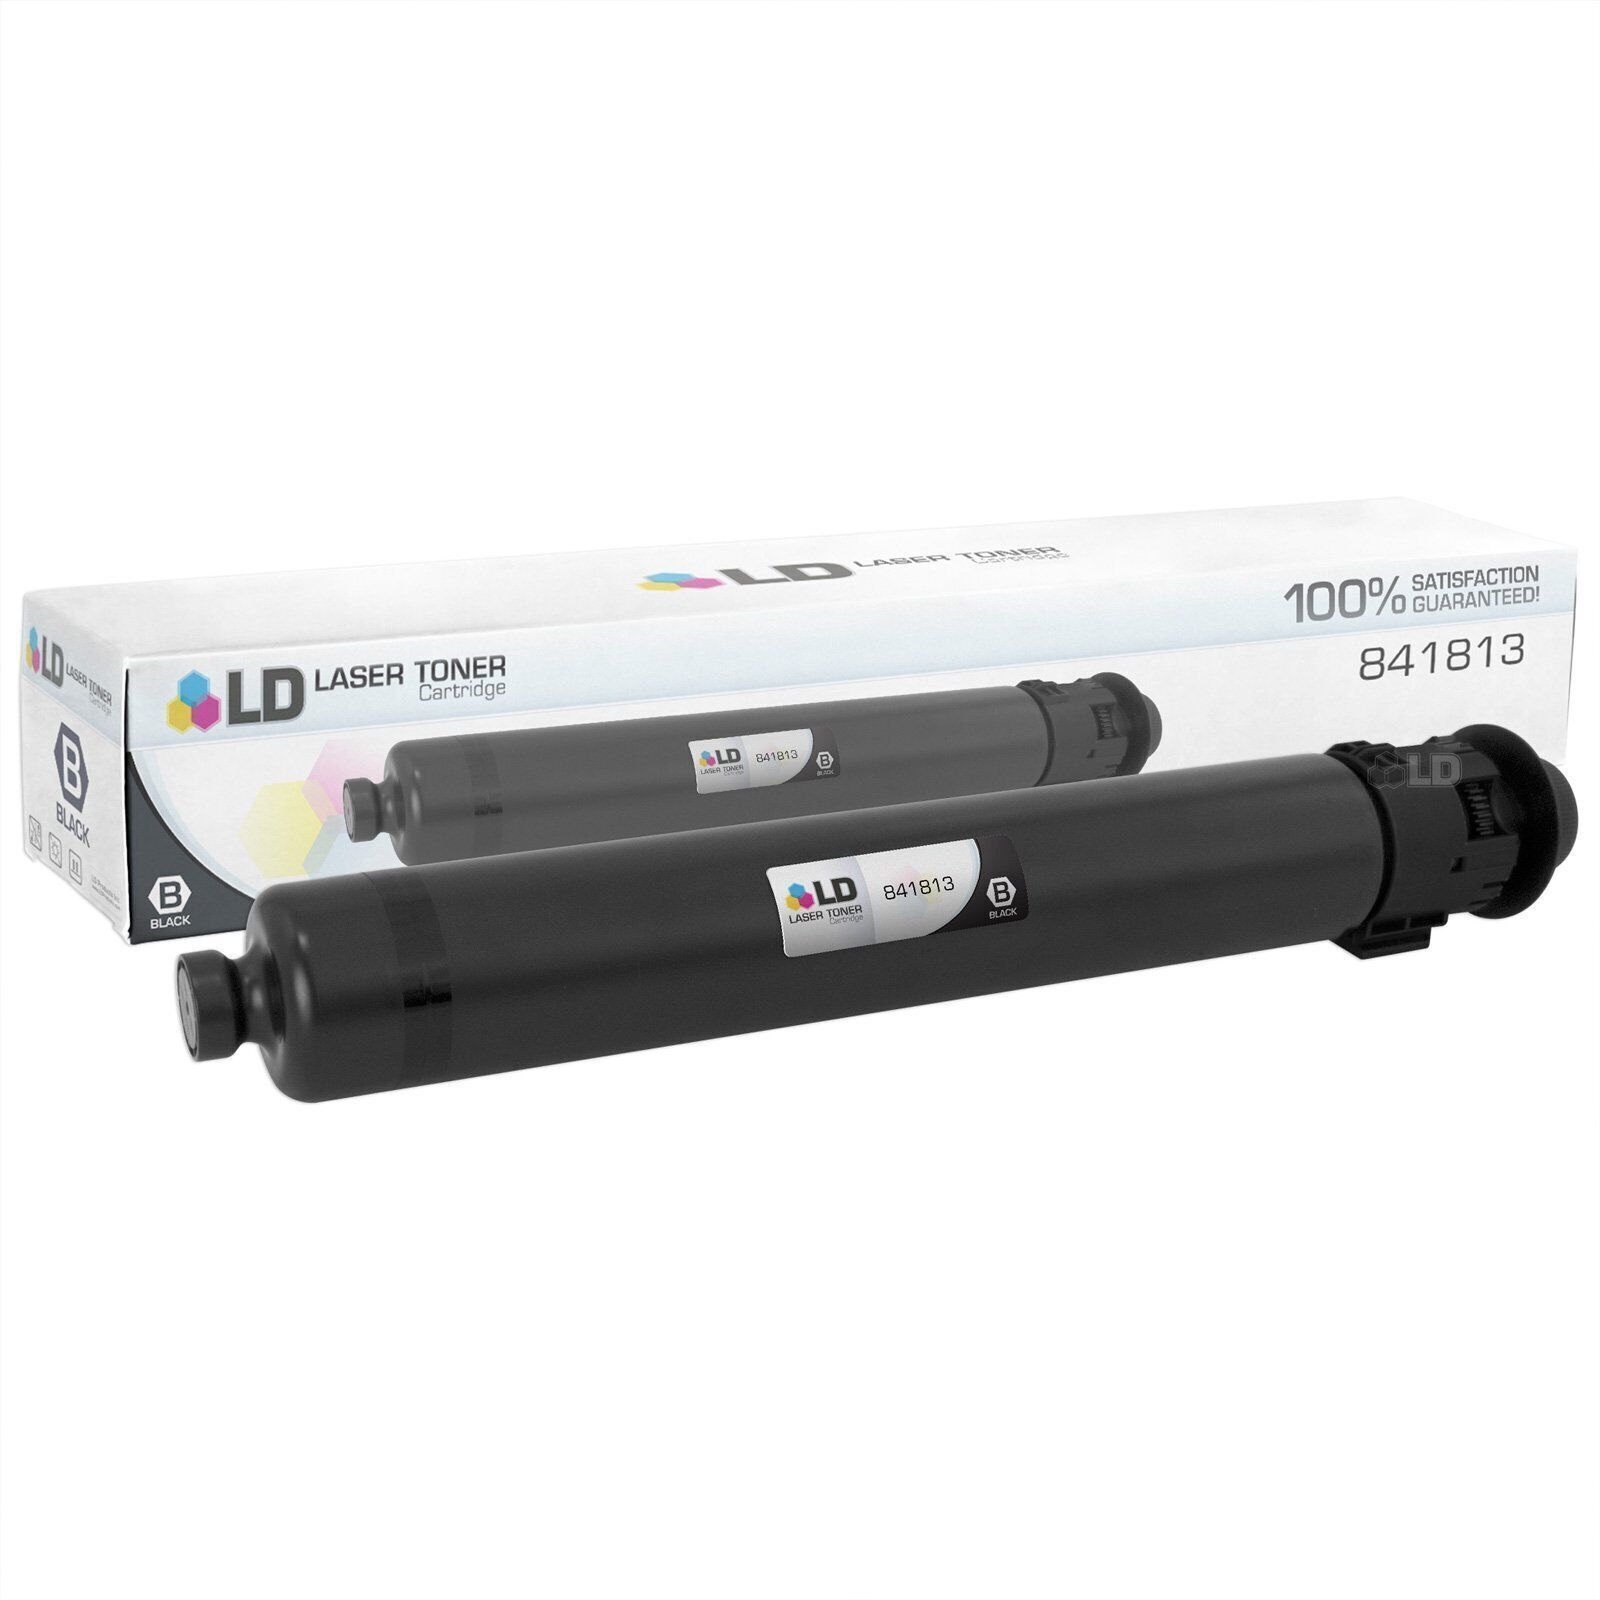 LD Compatible Toner Cartridge Replacement for Ricoh MP C3503 841813 (Black)